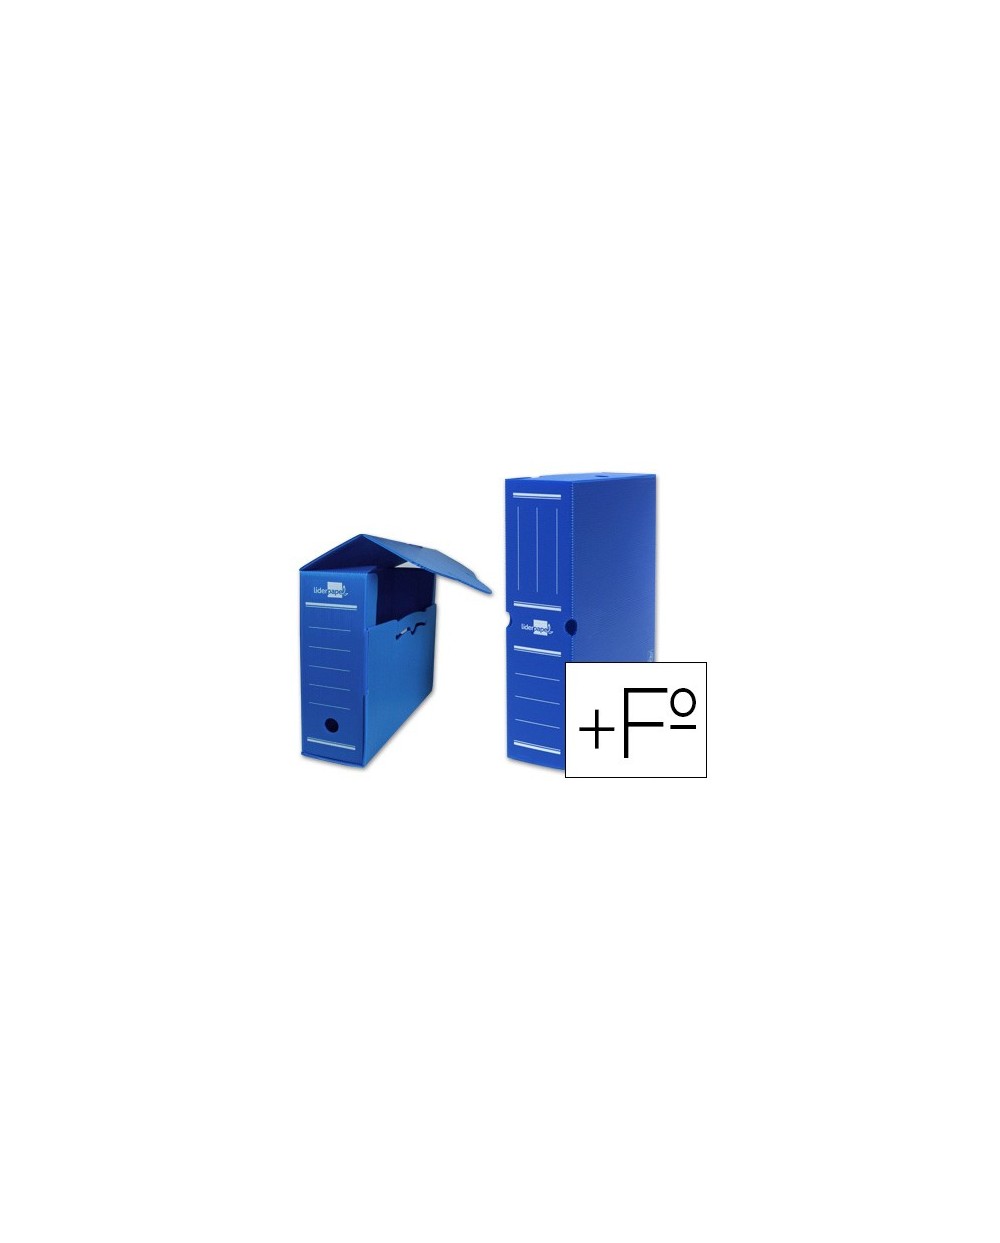 Caja archivo definitivo plastico liderpapel azul 387x275x105 mm